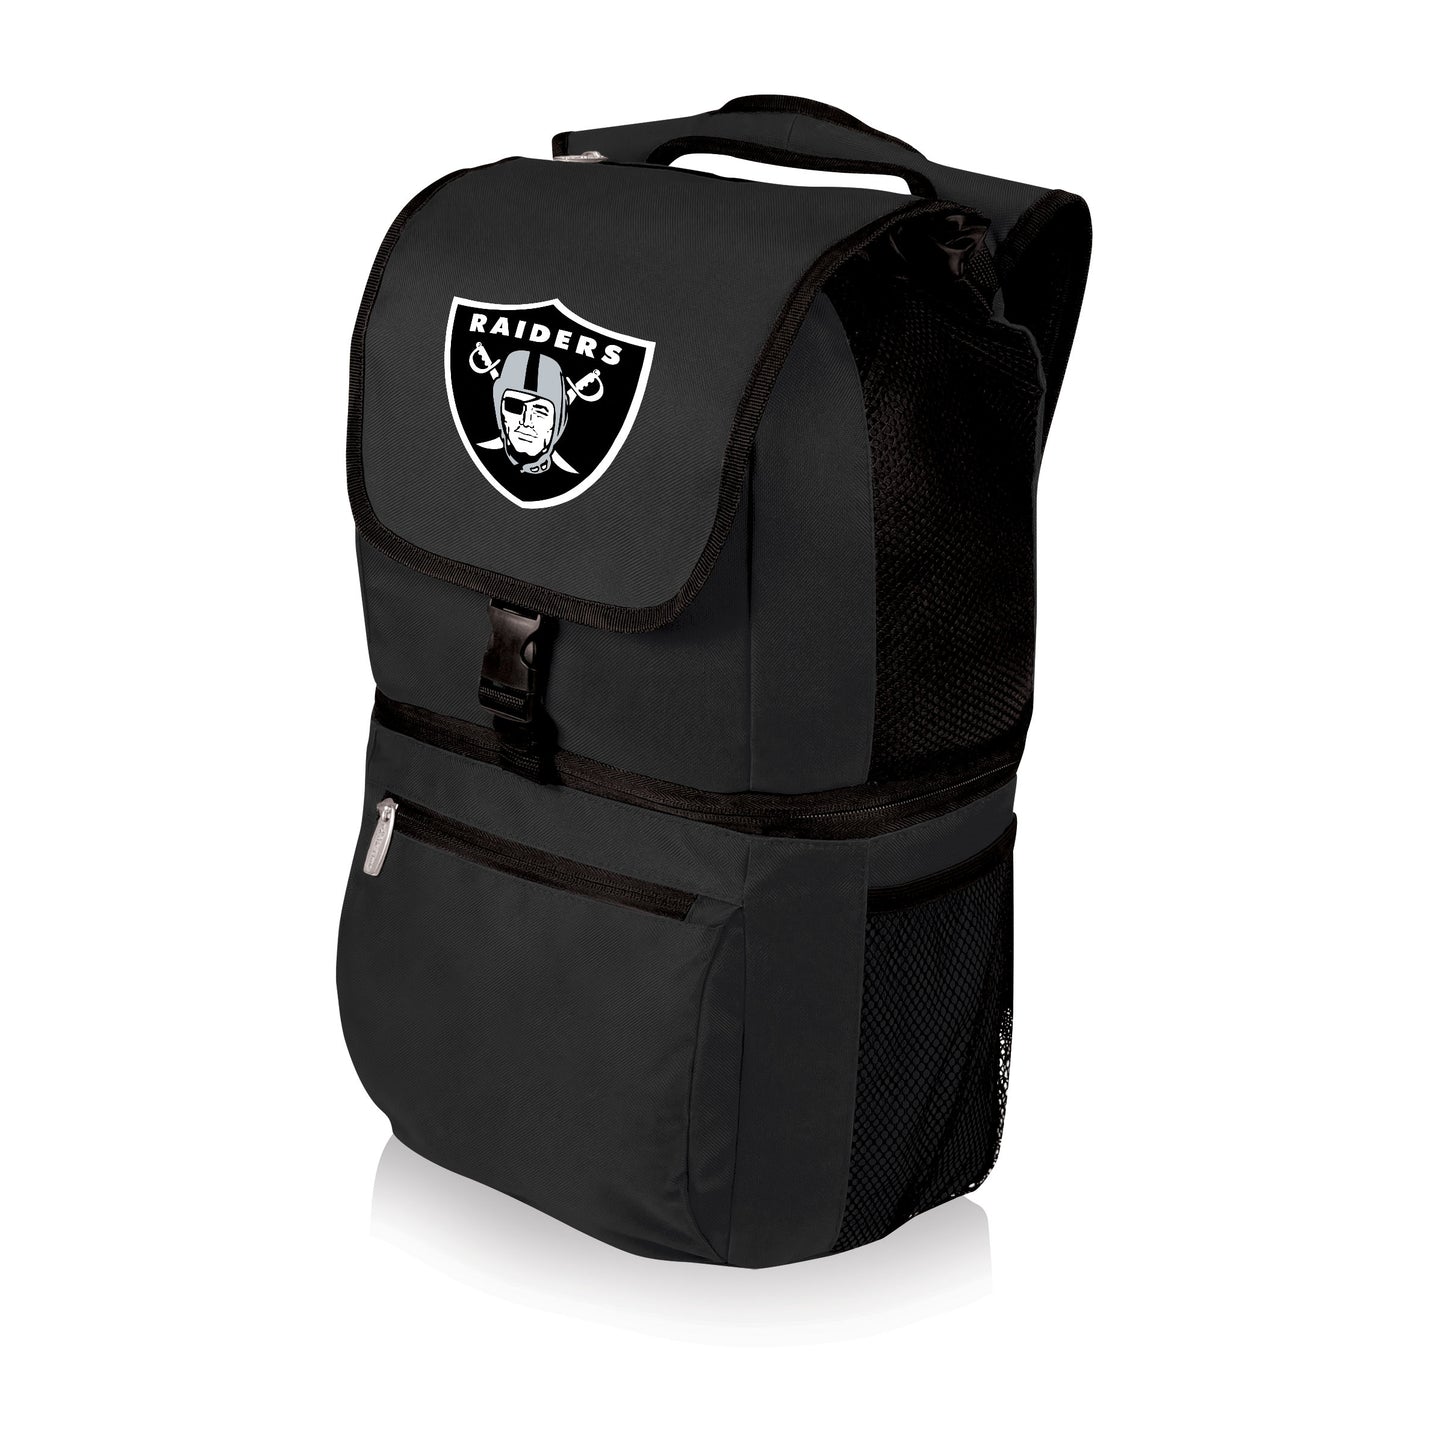 Las Vegas Raiders - Zuma Backpack Cooler